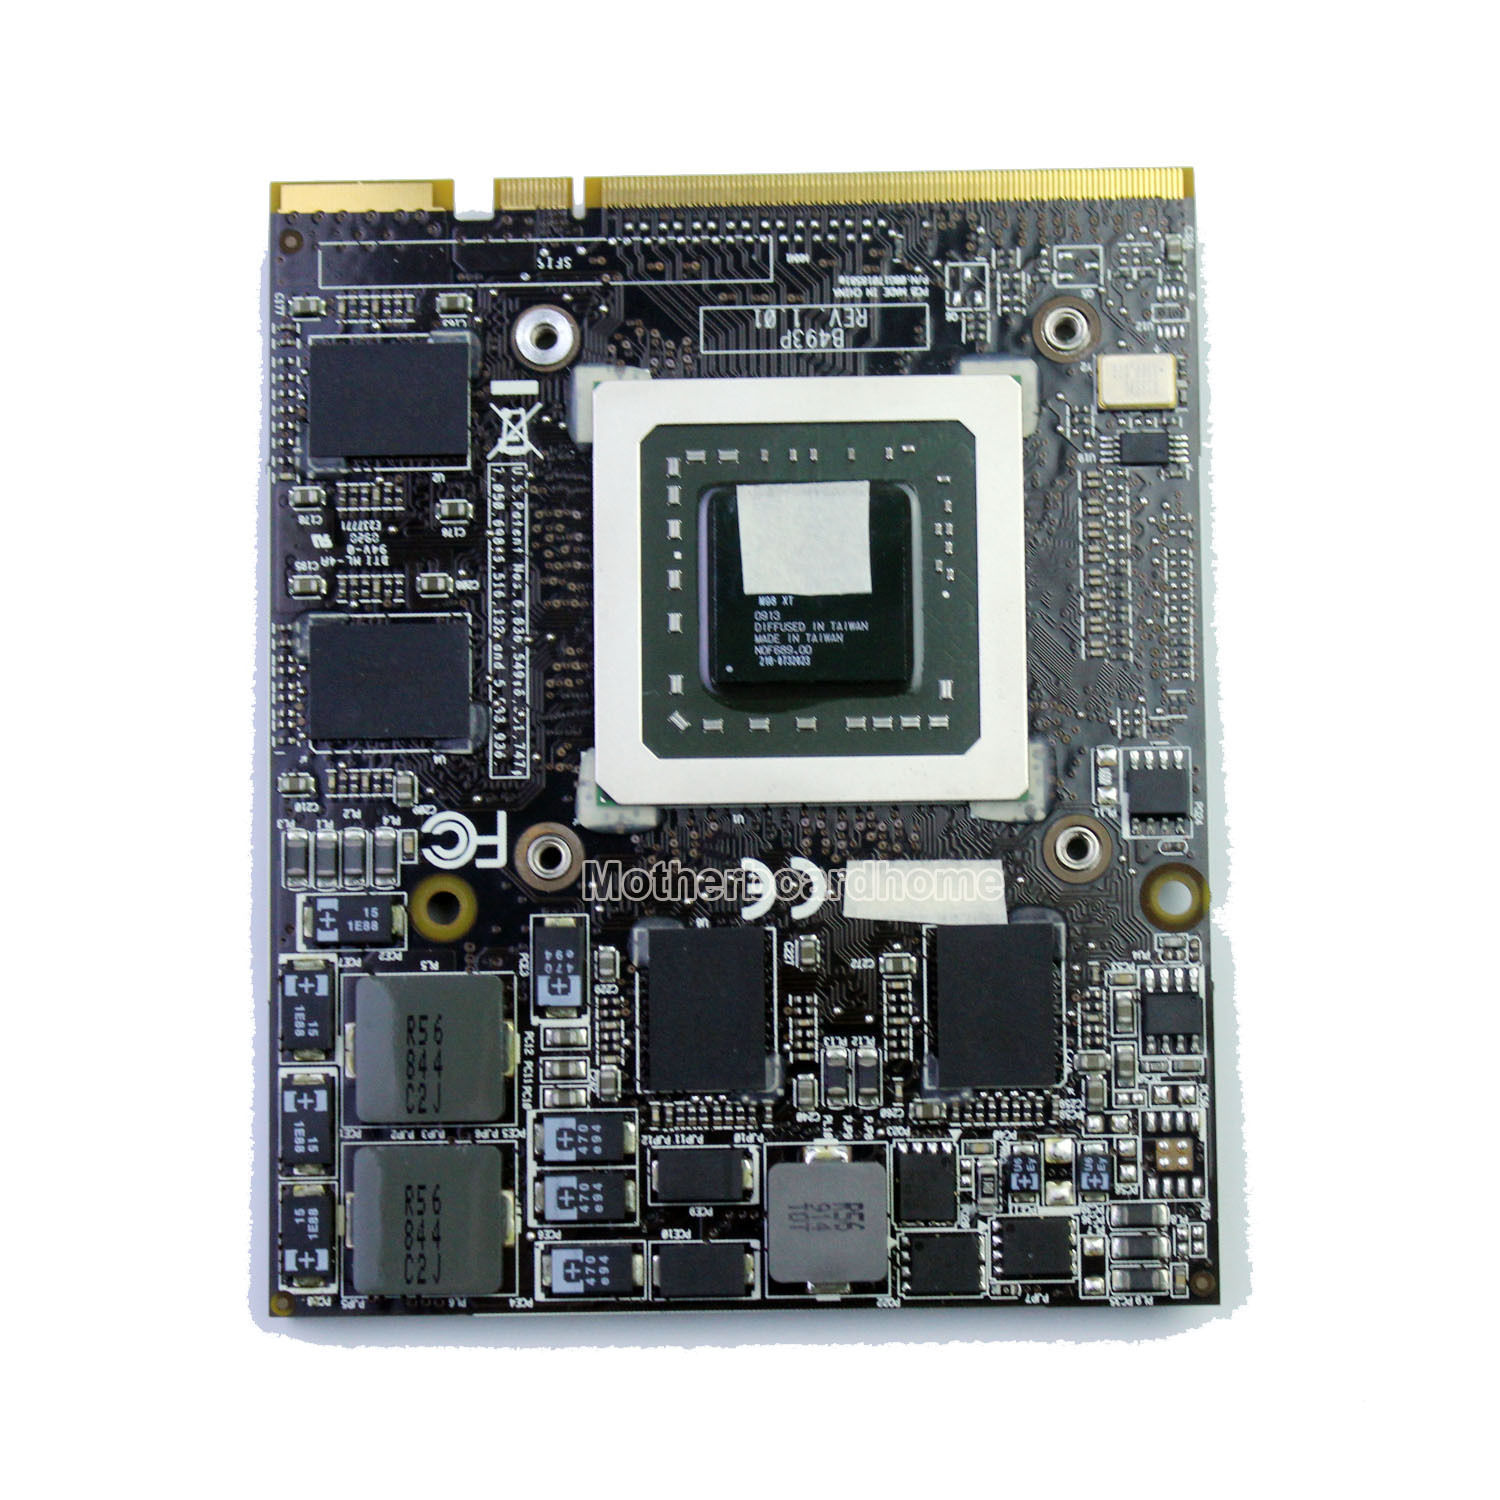 ASUS ATI Mobility Radeon 512M MA4870 Graphics Card Board 216-073